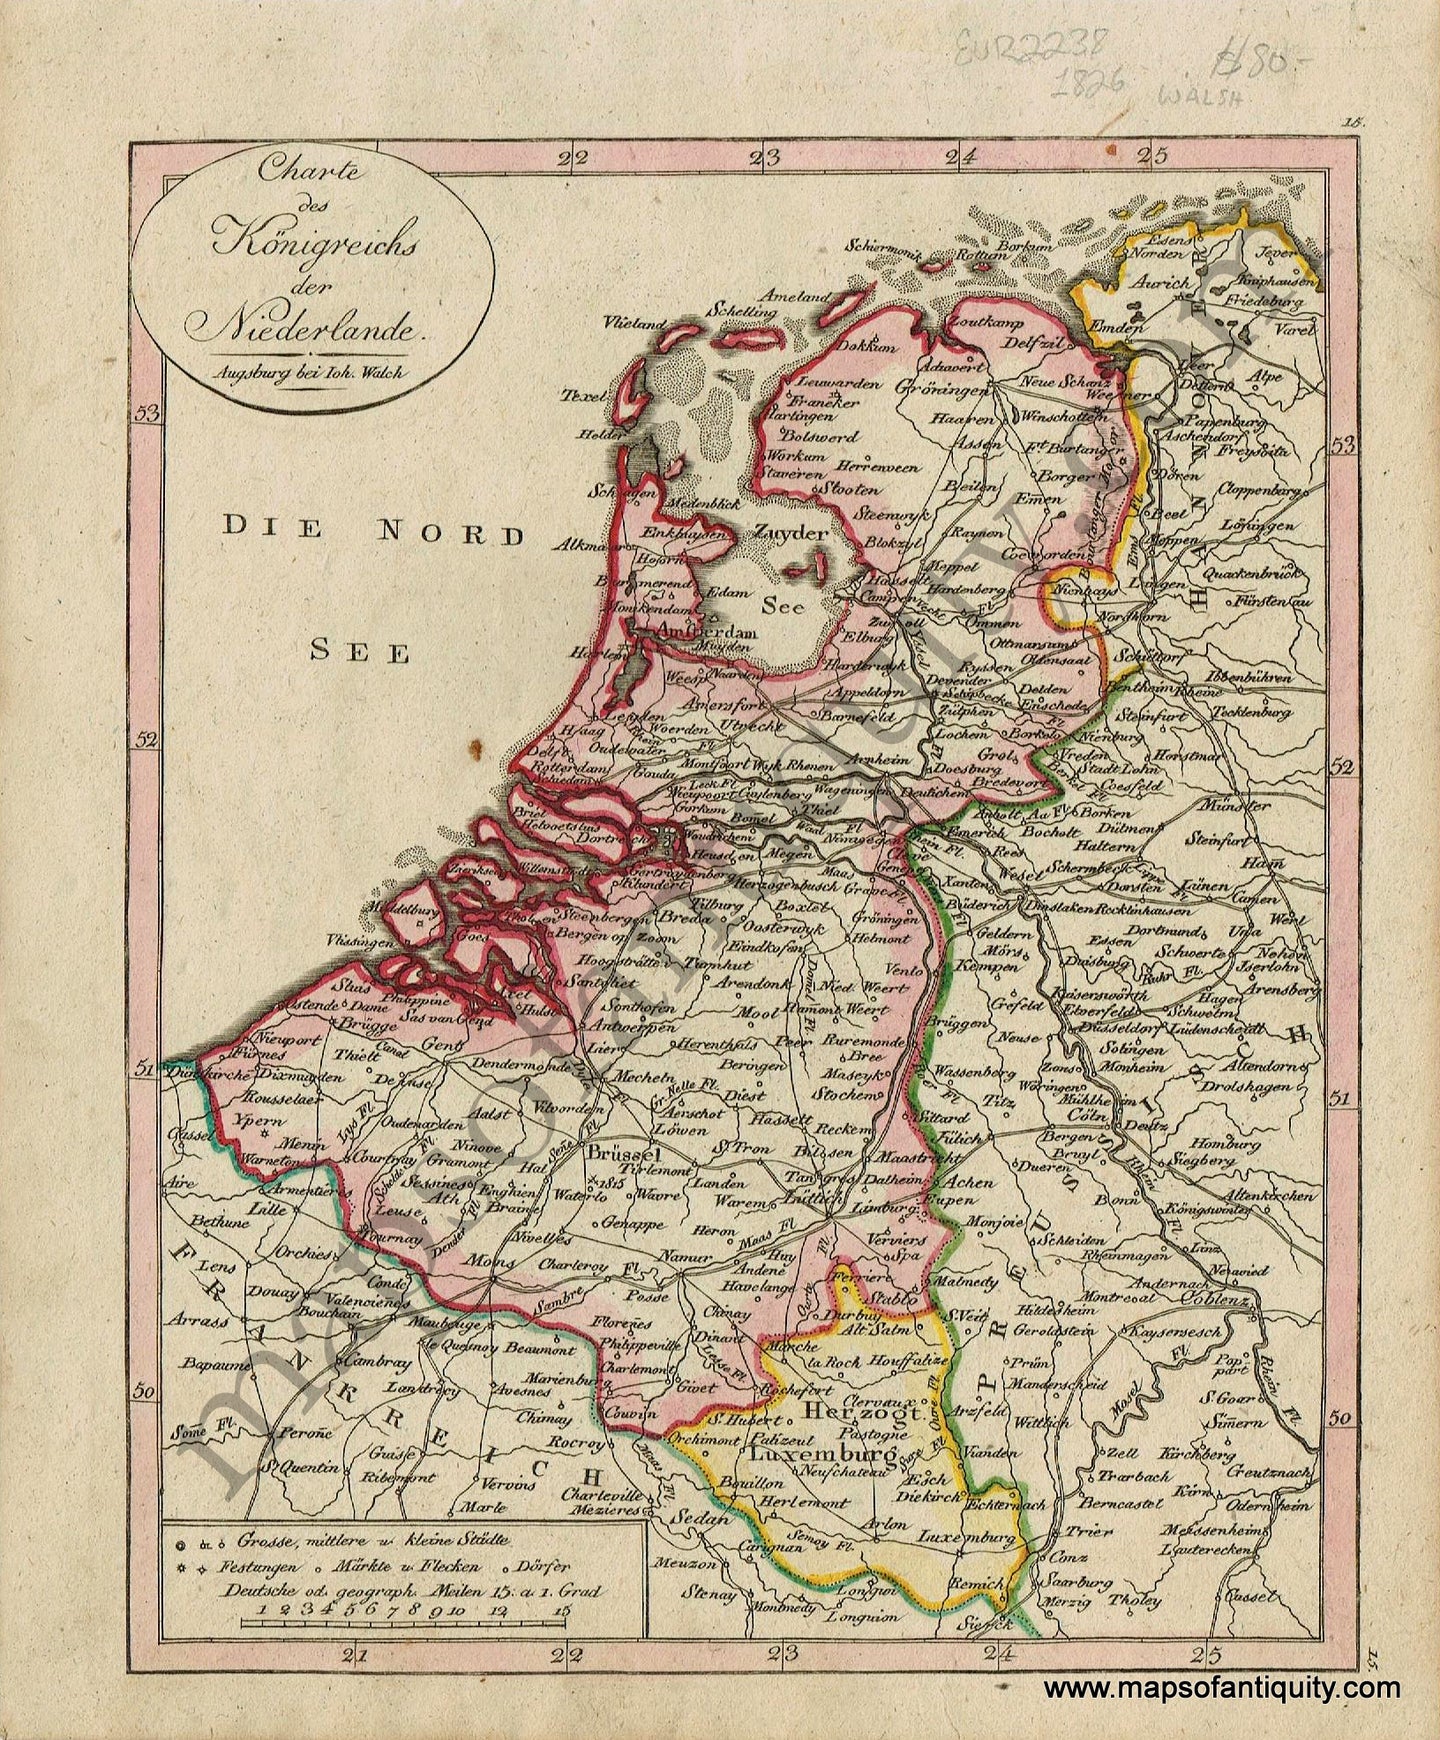 Antique-Map-Charte-des-Konigreichs-der-Niederlande-Kingdom-of-the-Netherlands-Holland-German-Walch-Neuester-Schul-Atlass-1826-1820s-Early-19th-Century-Maps-of-Antiquity